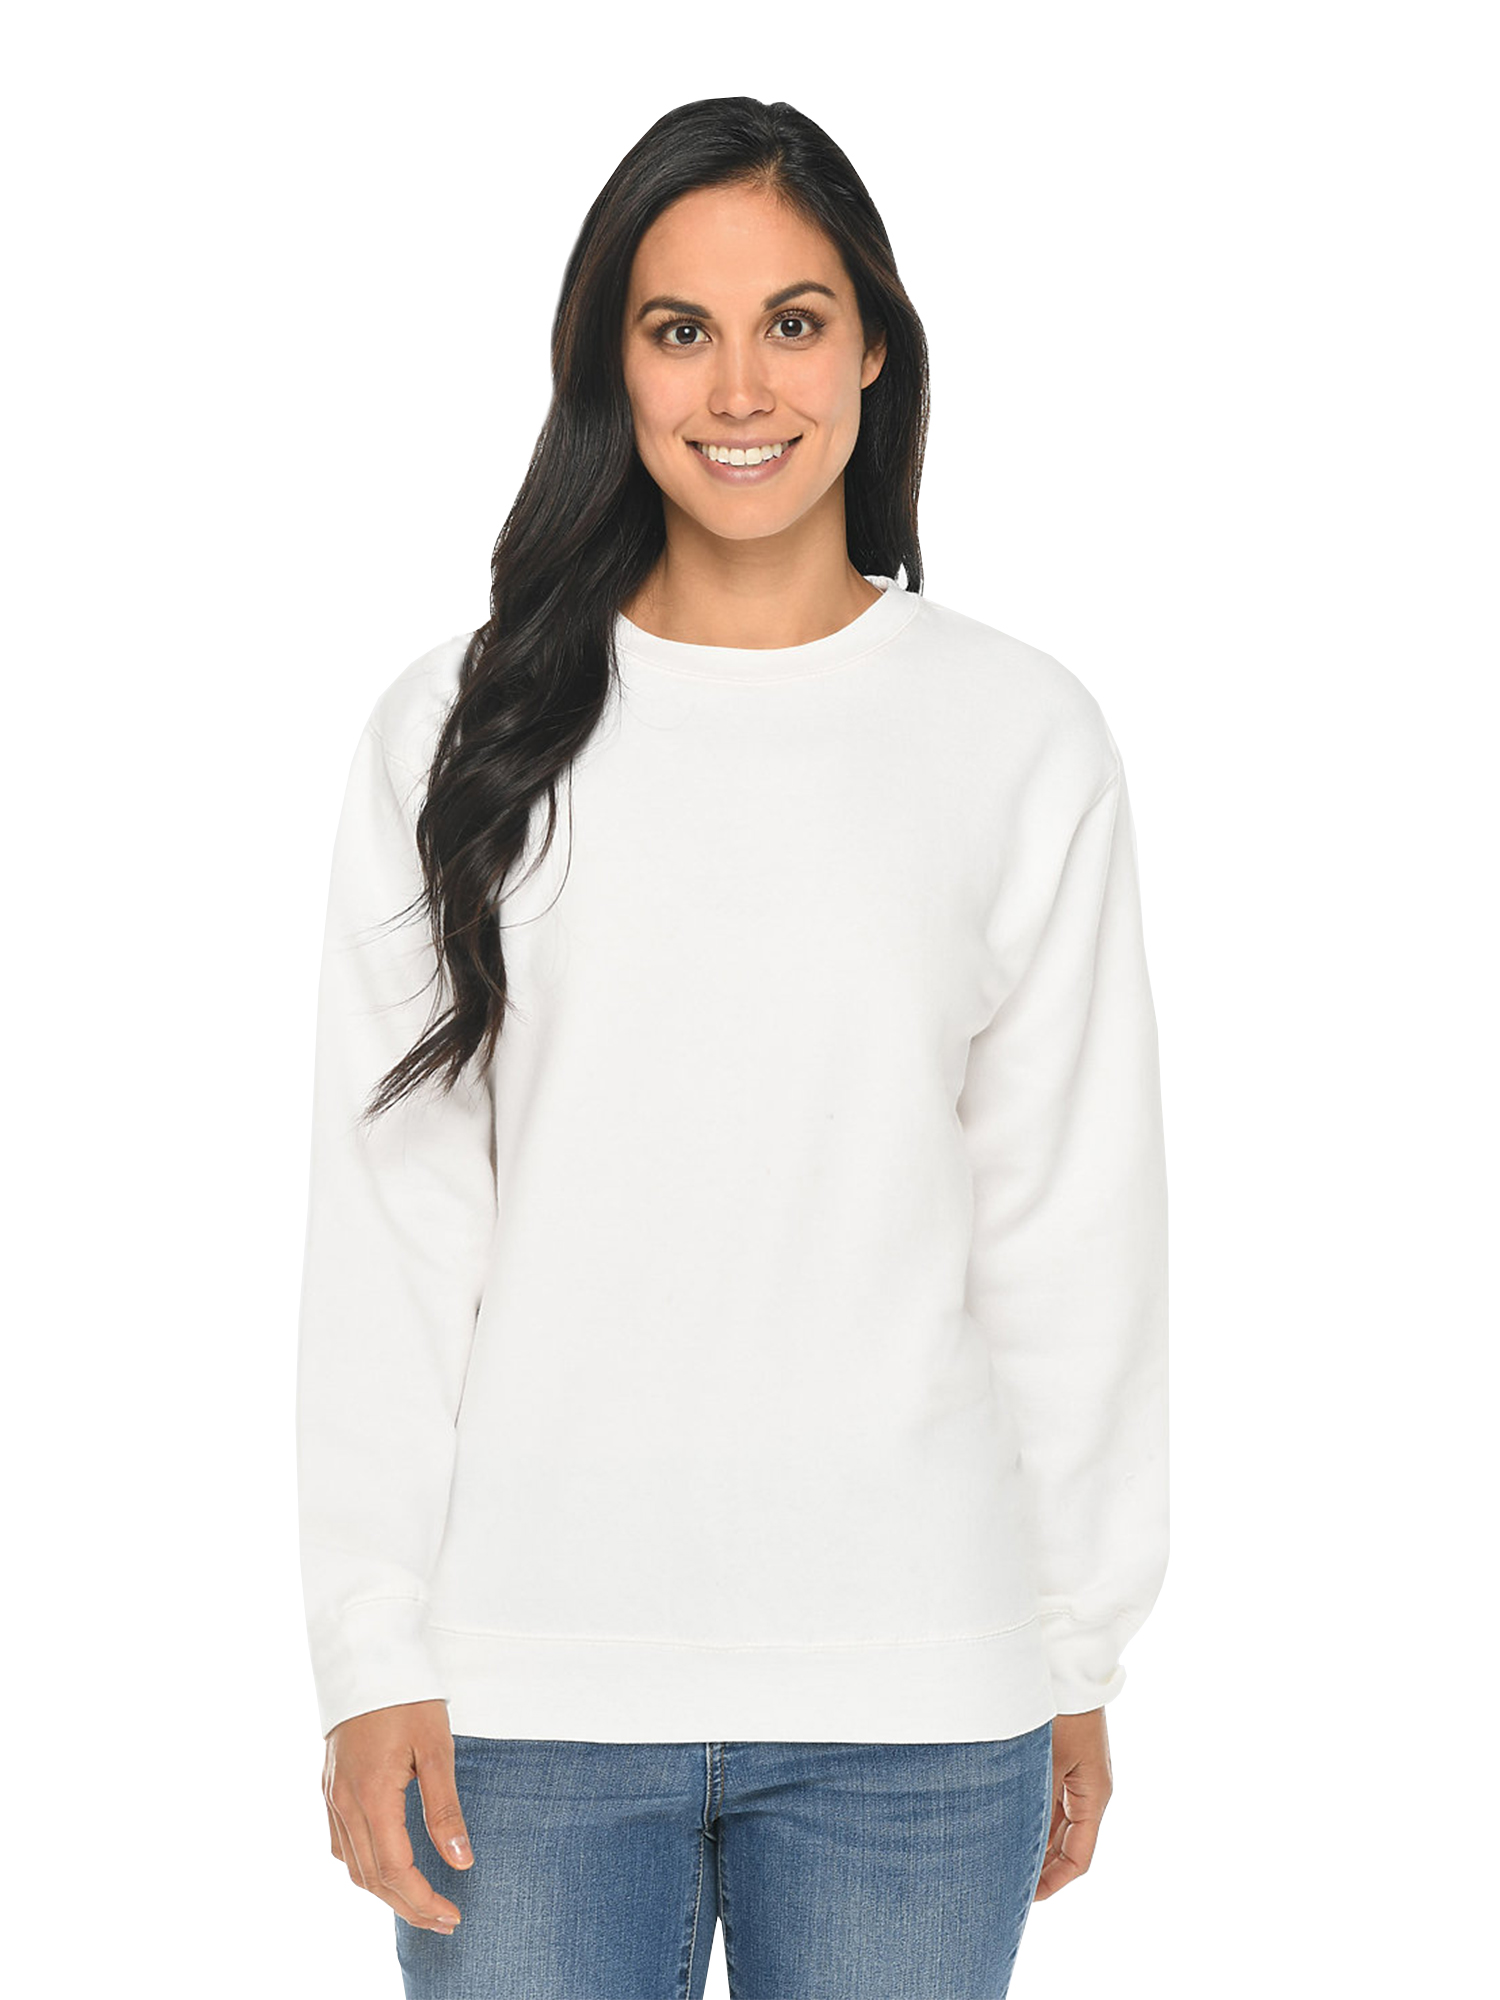 Unisex Sweatshirts for Women Men Sweatshirt Casual Plain Uniform Long ...